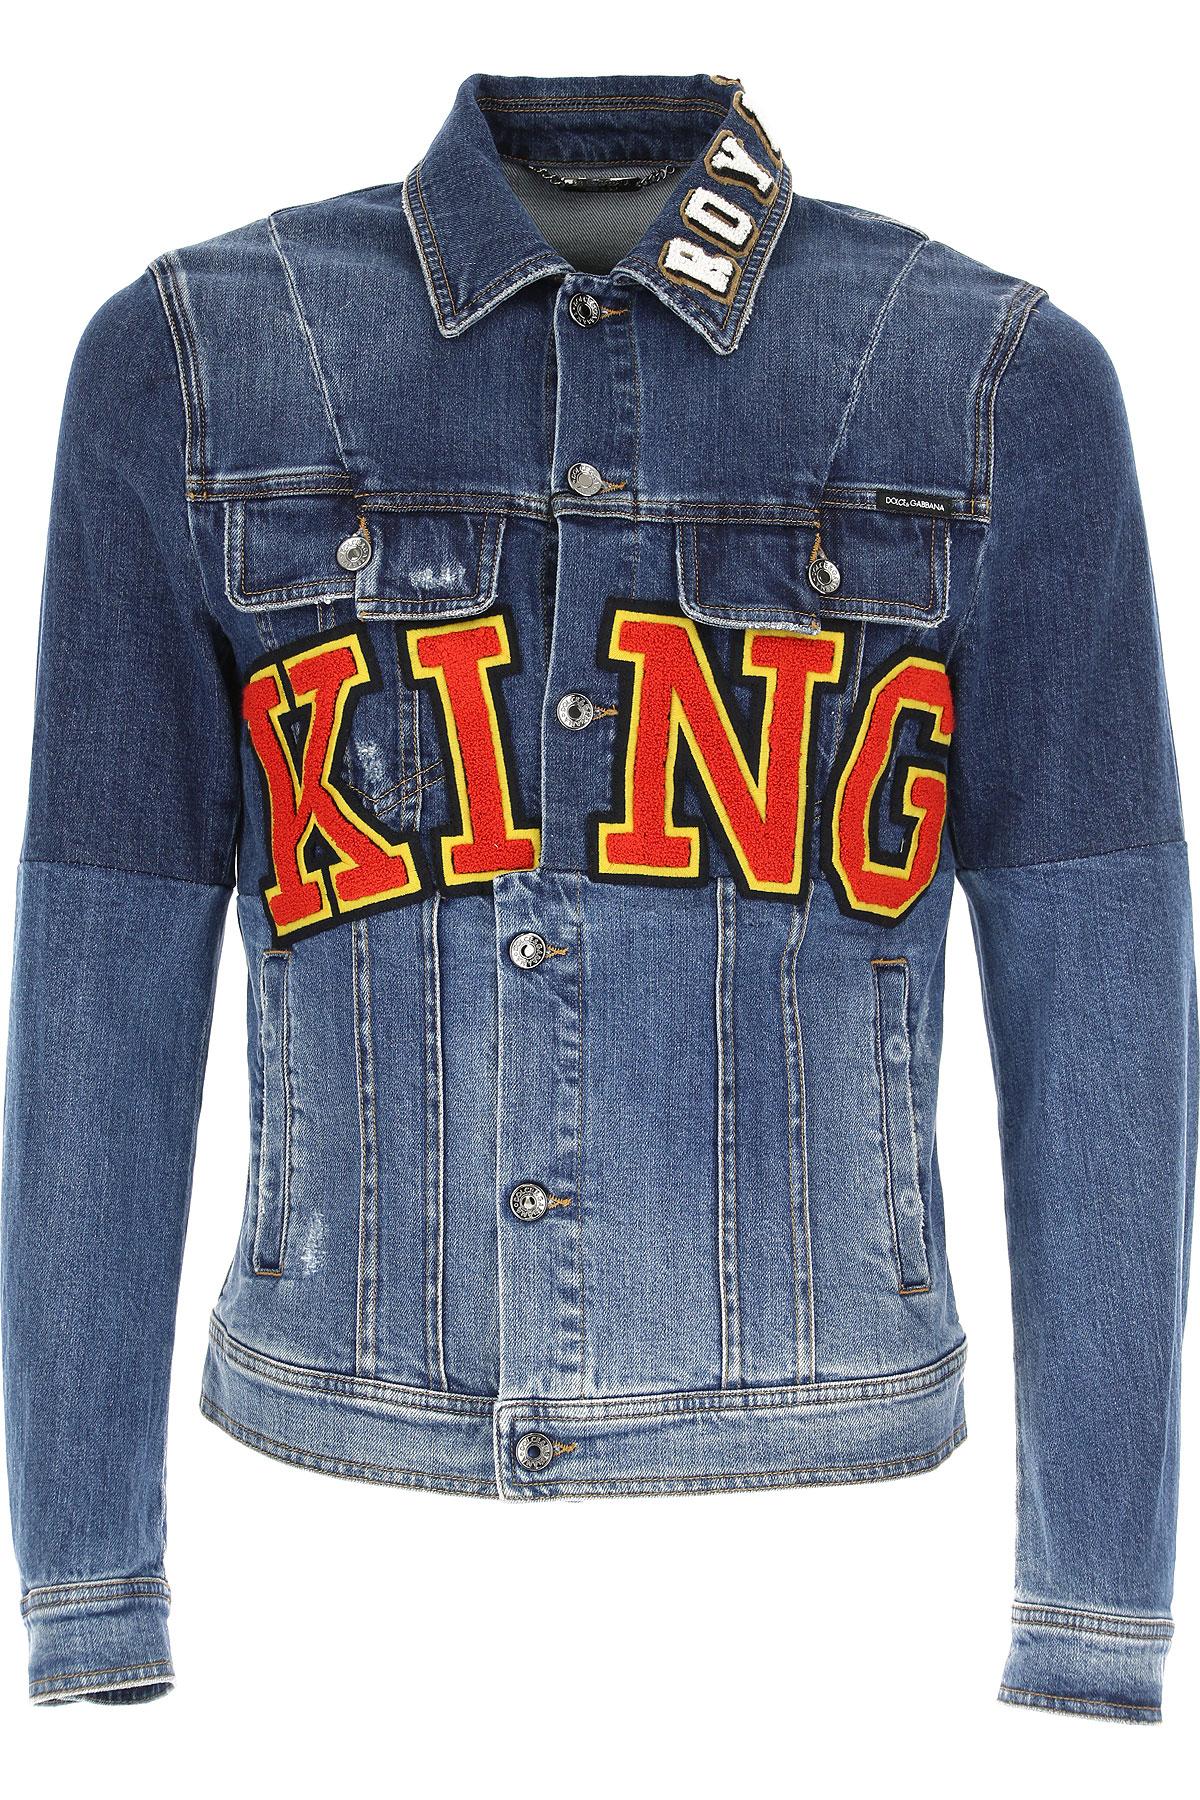 Dolce & Gabbana King Logo Denim Jacket in Blue for Men - Lyst